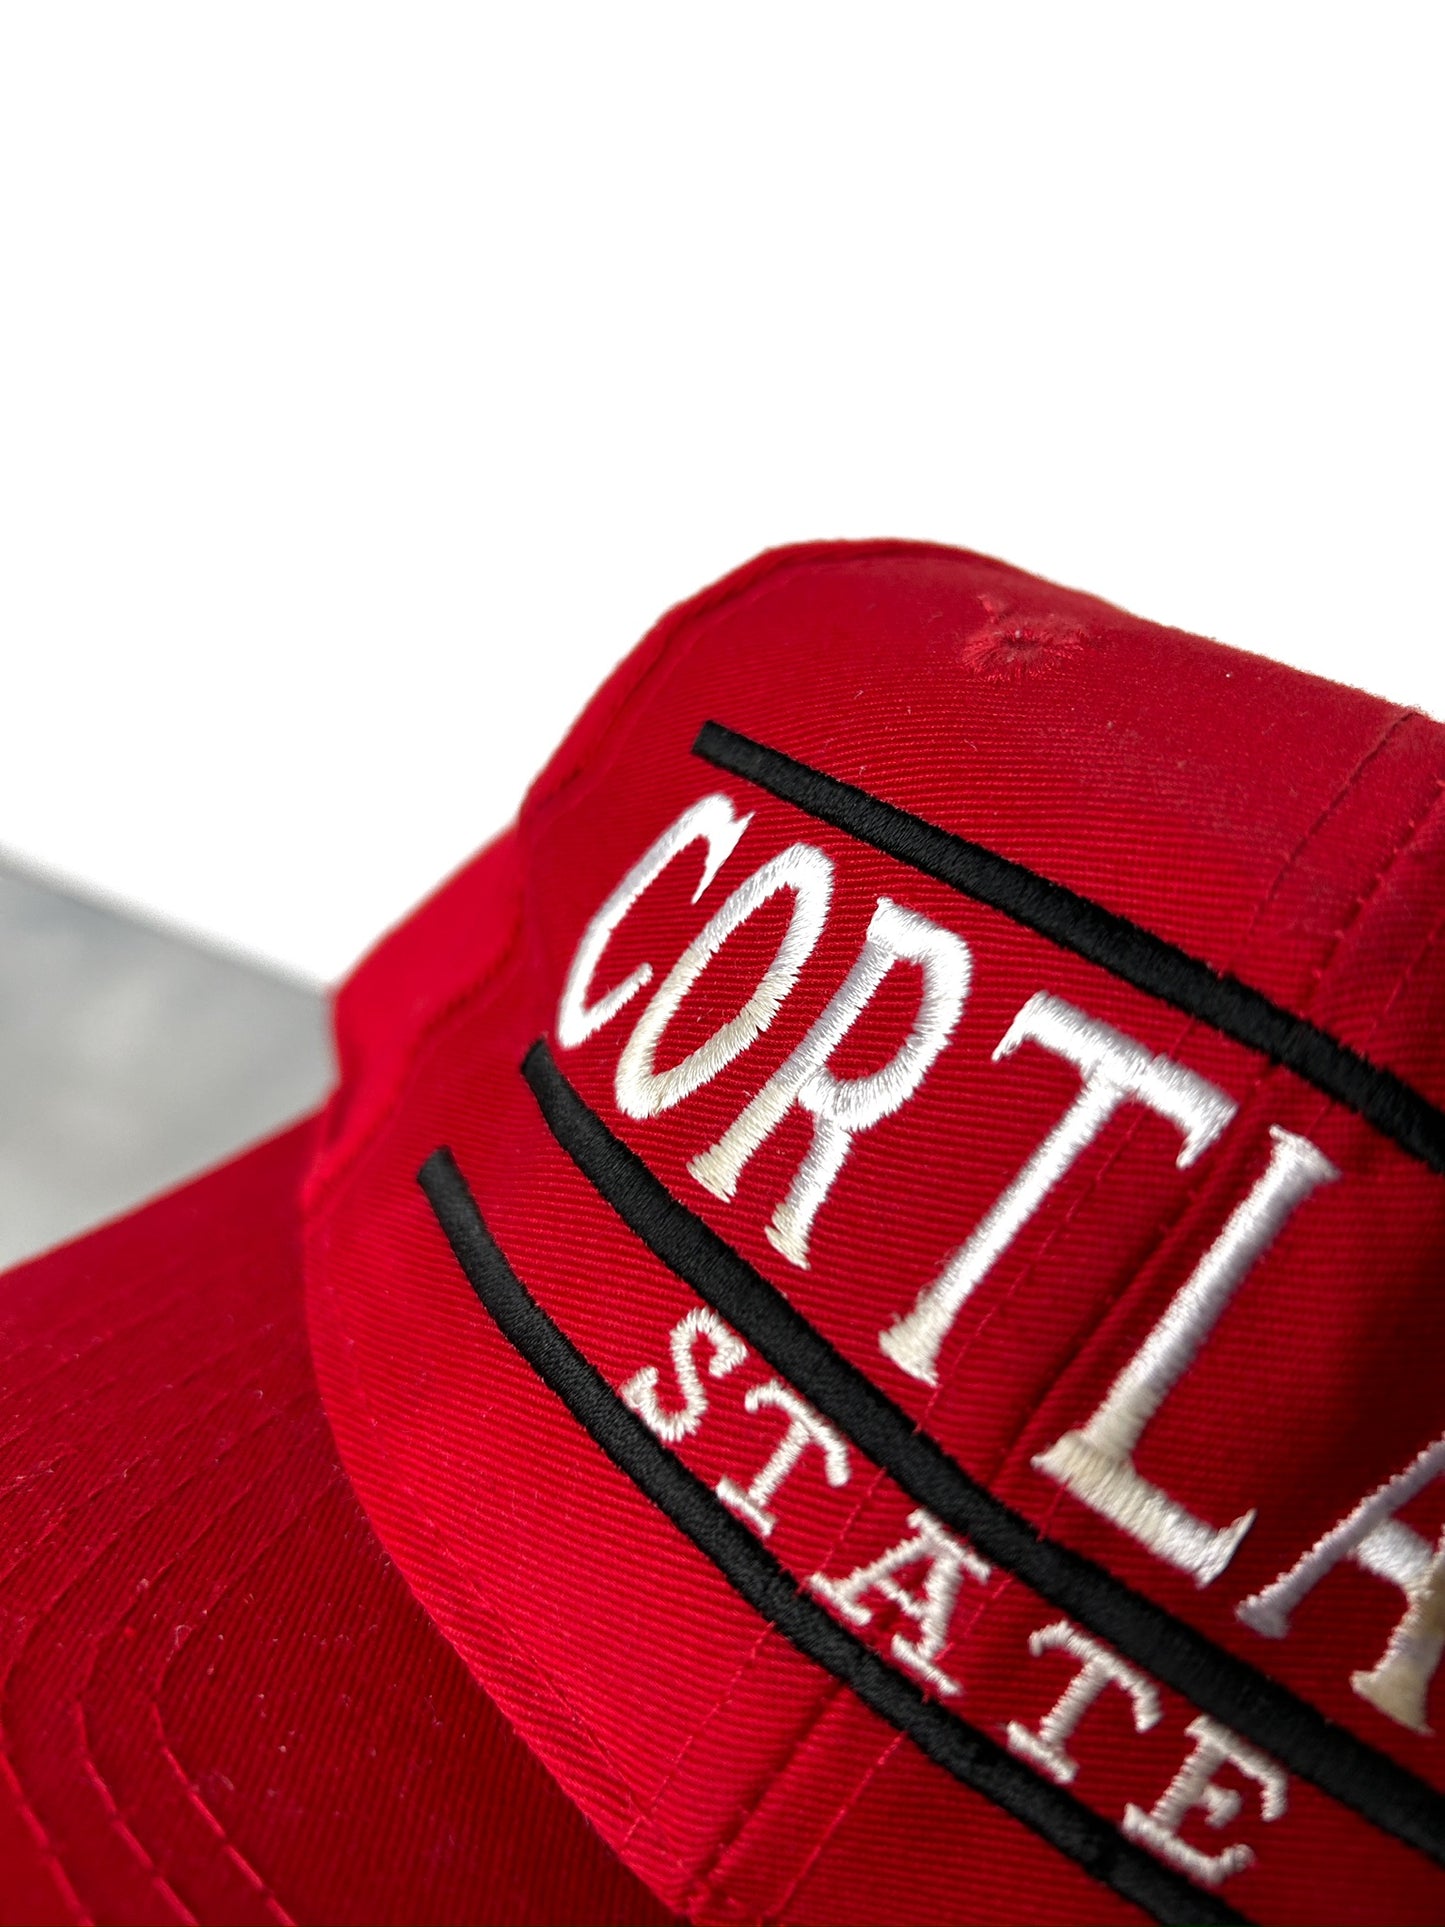 Cortland State Triple Bar Hat 90's